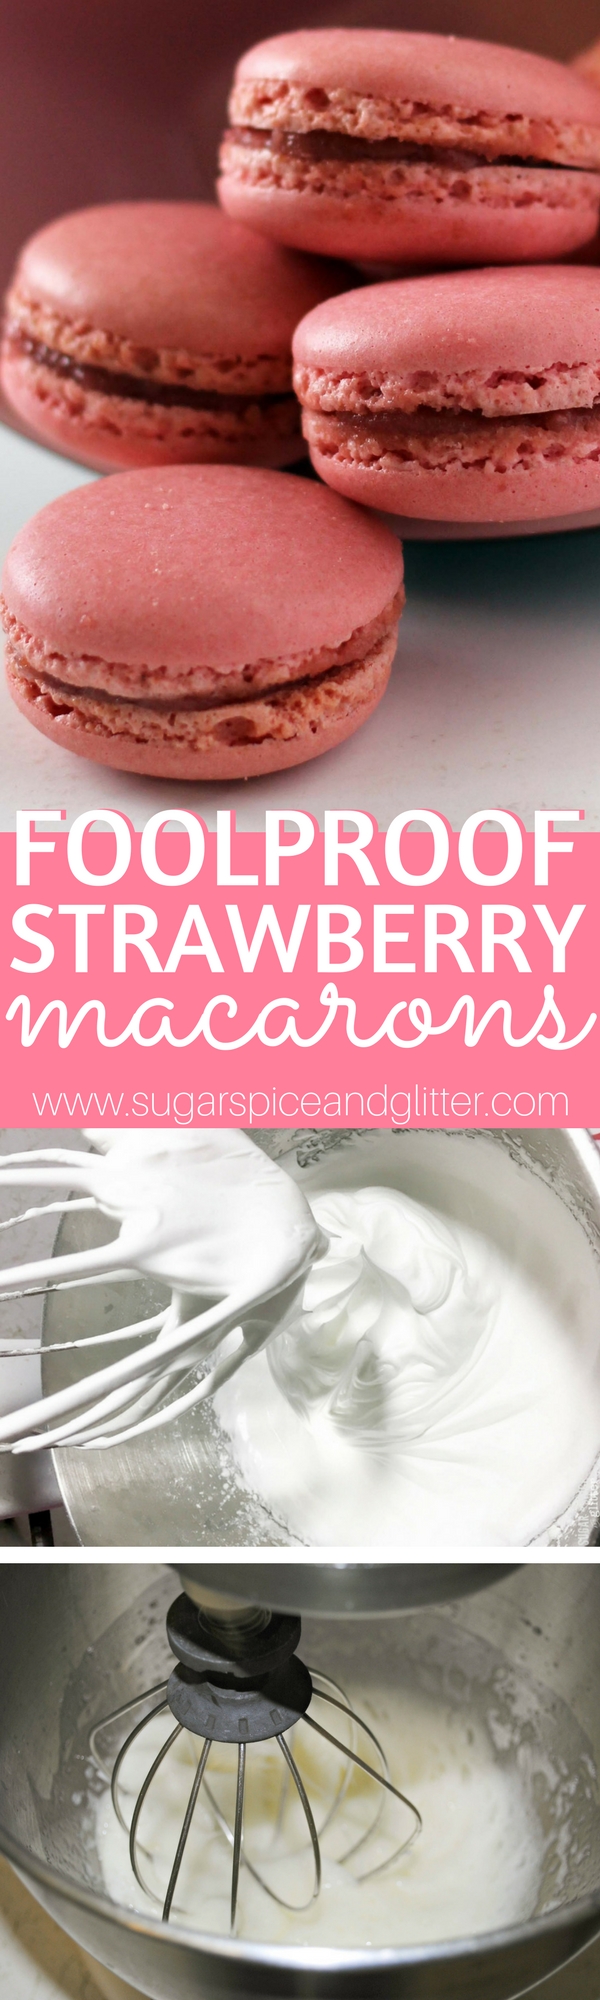 Strawberry Macarons With Video Sugar Spice And Glitter,Azalea Bush Diseases